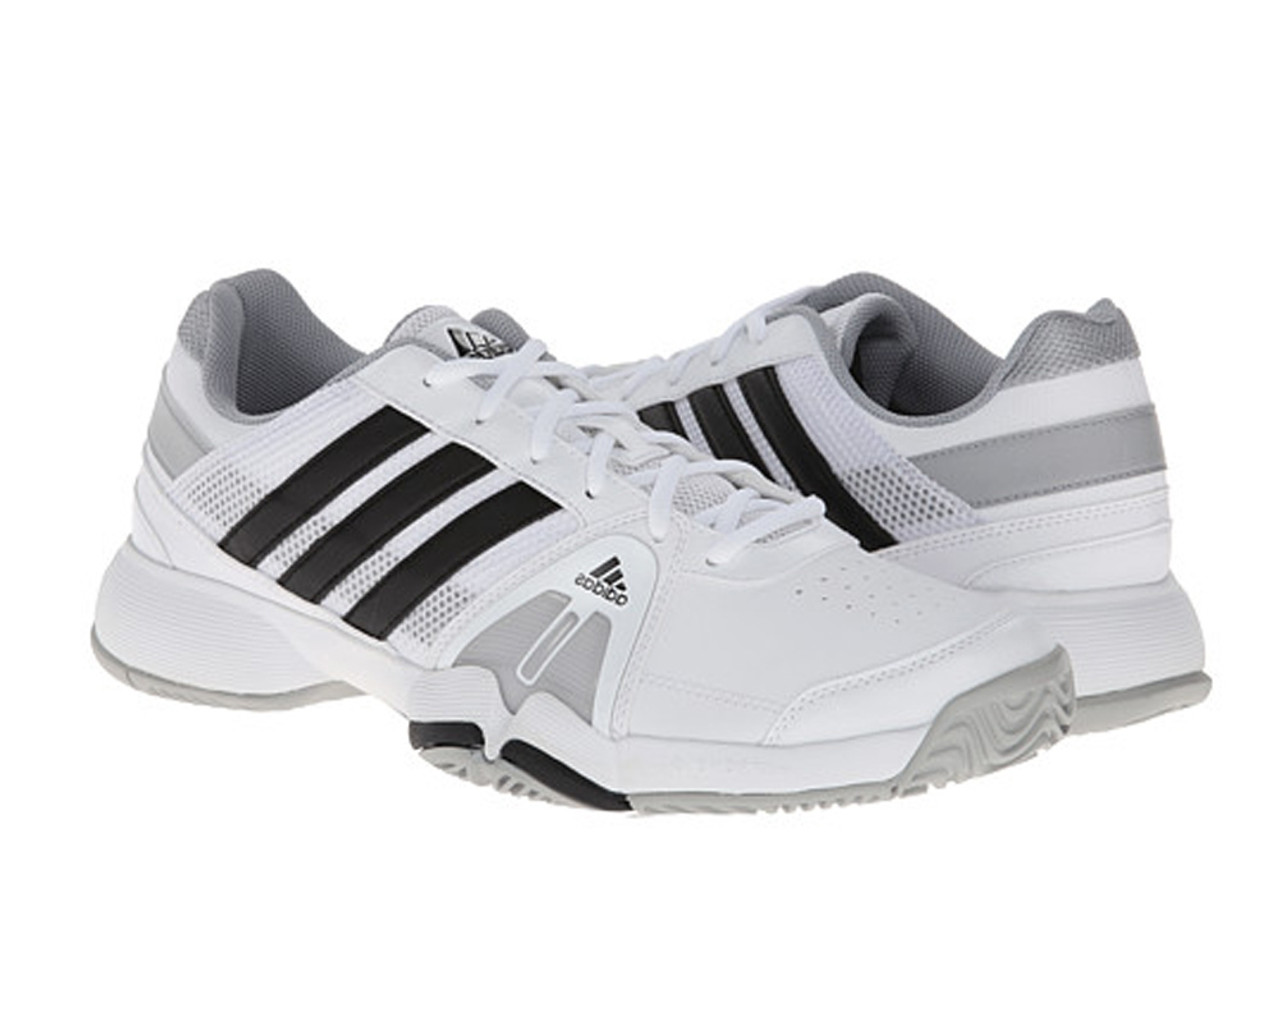 Adidas Men's Barricade Team 3 Tennis Shoes - White | Discount Adidas Athletic Shoes & More Shoolu.com |